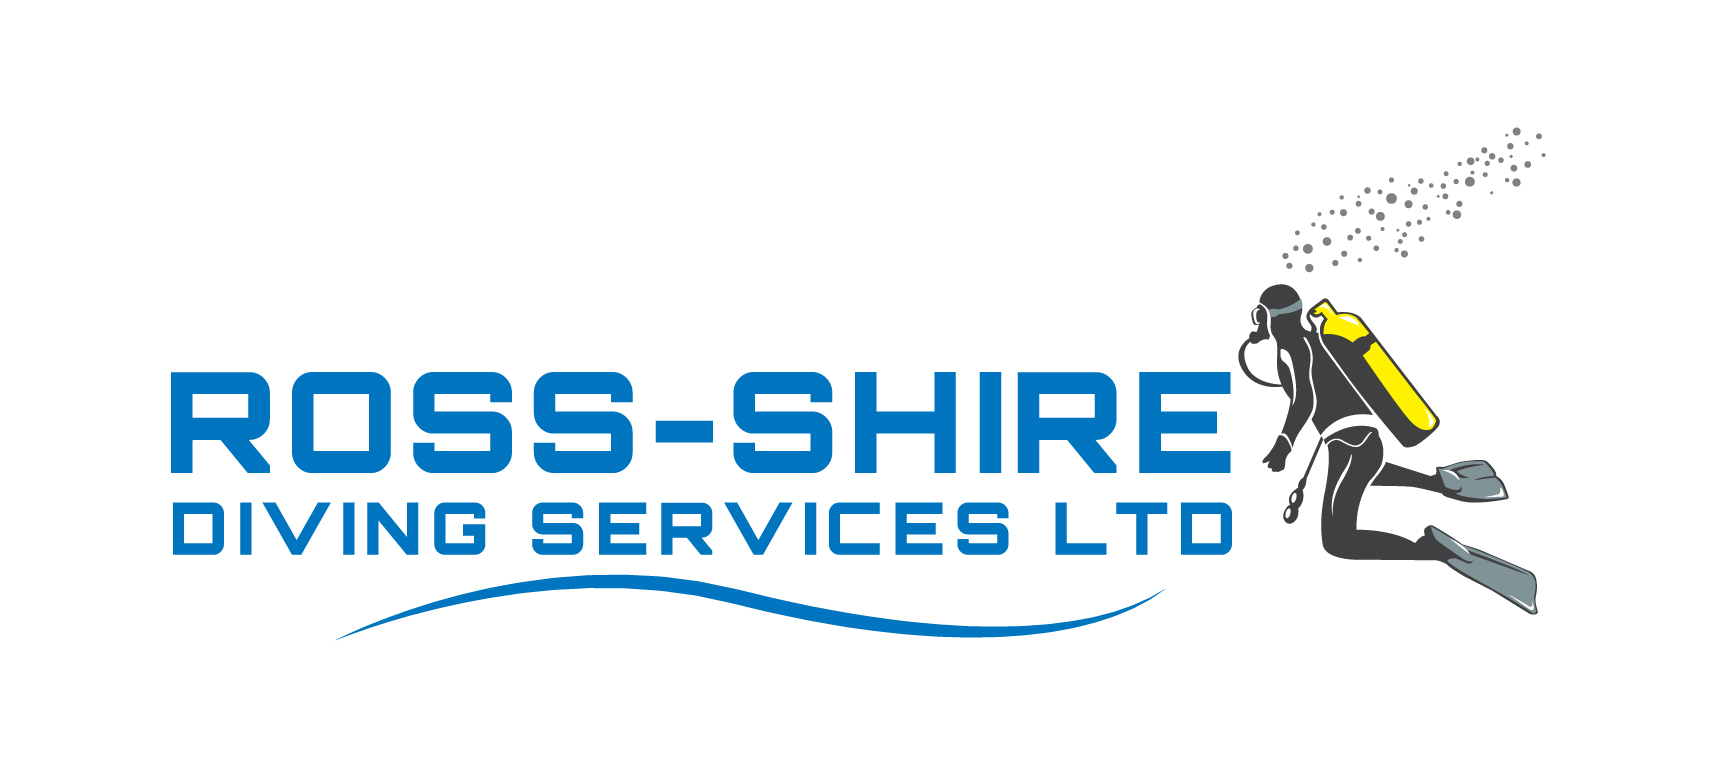 Ross-shire-Diving-Services-Ltd_final